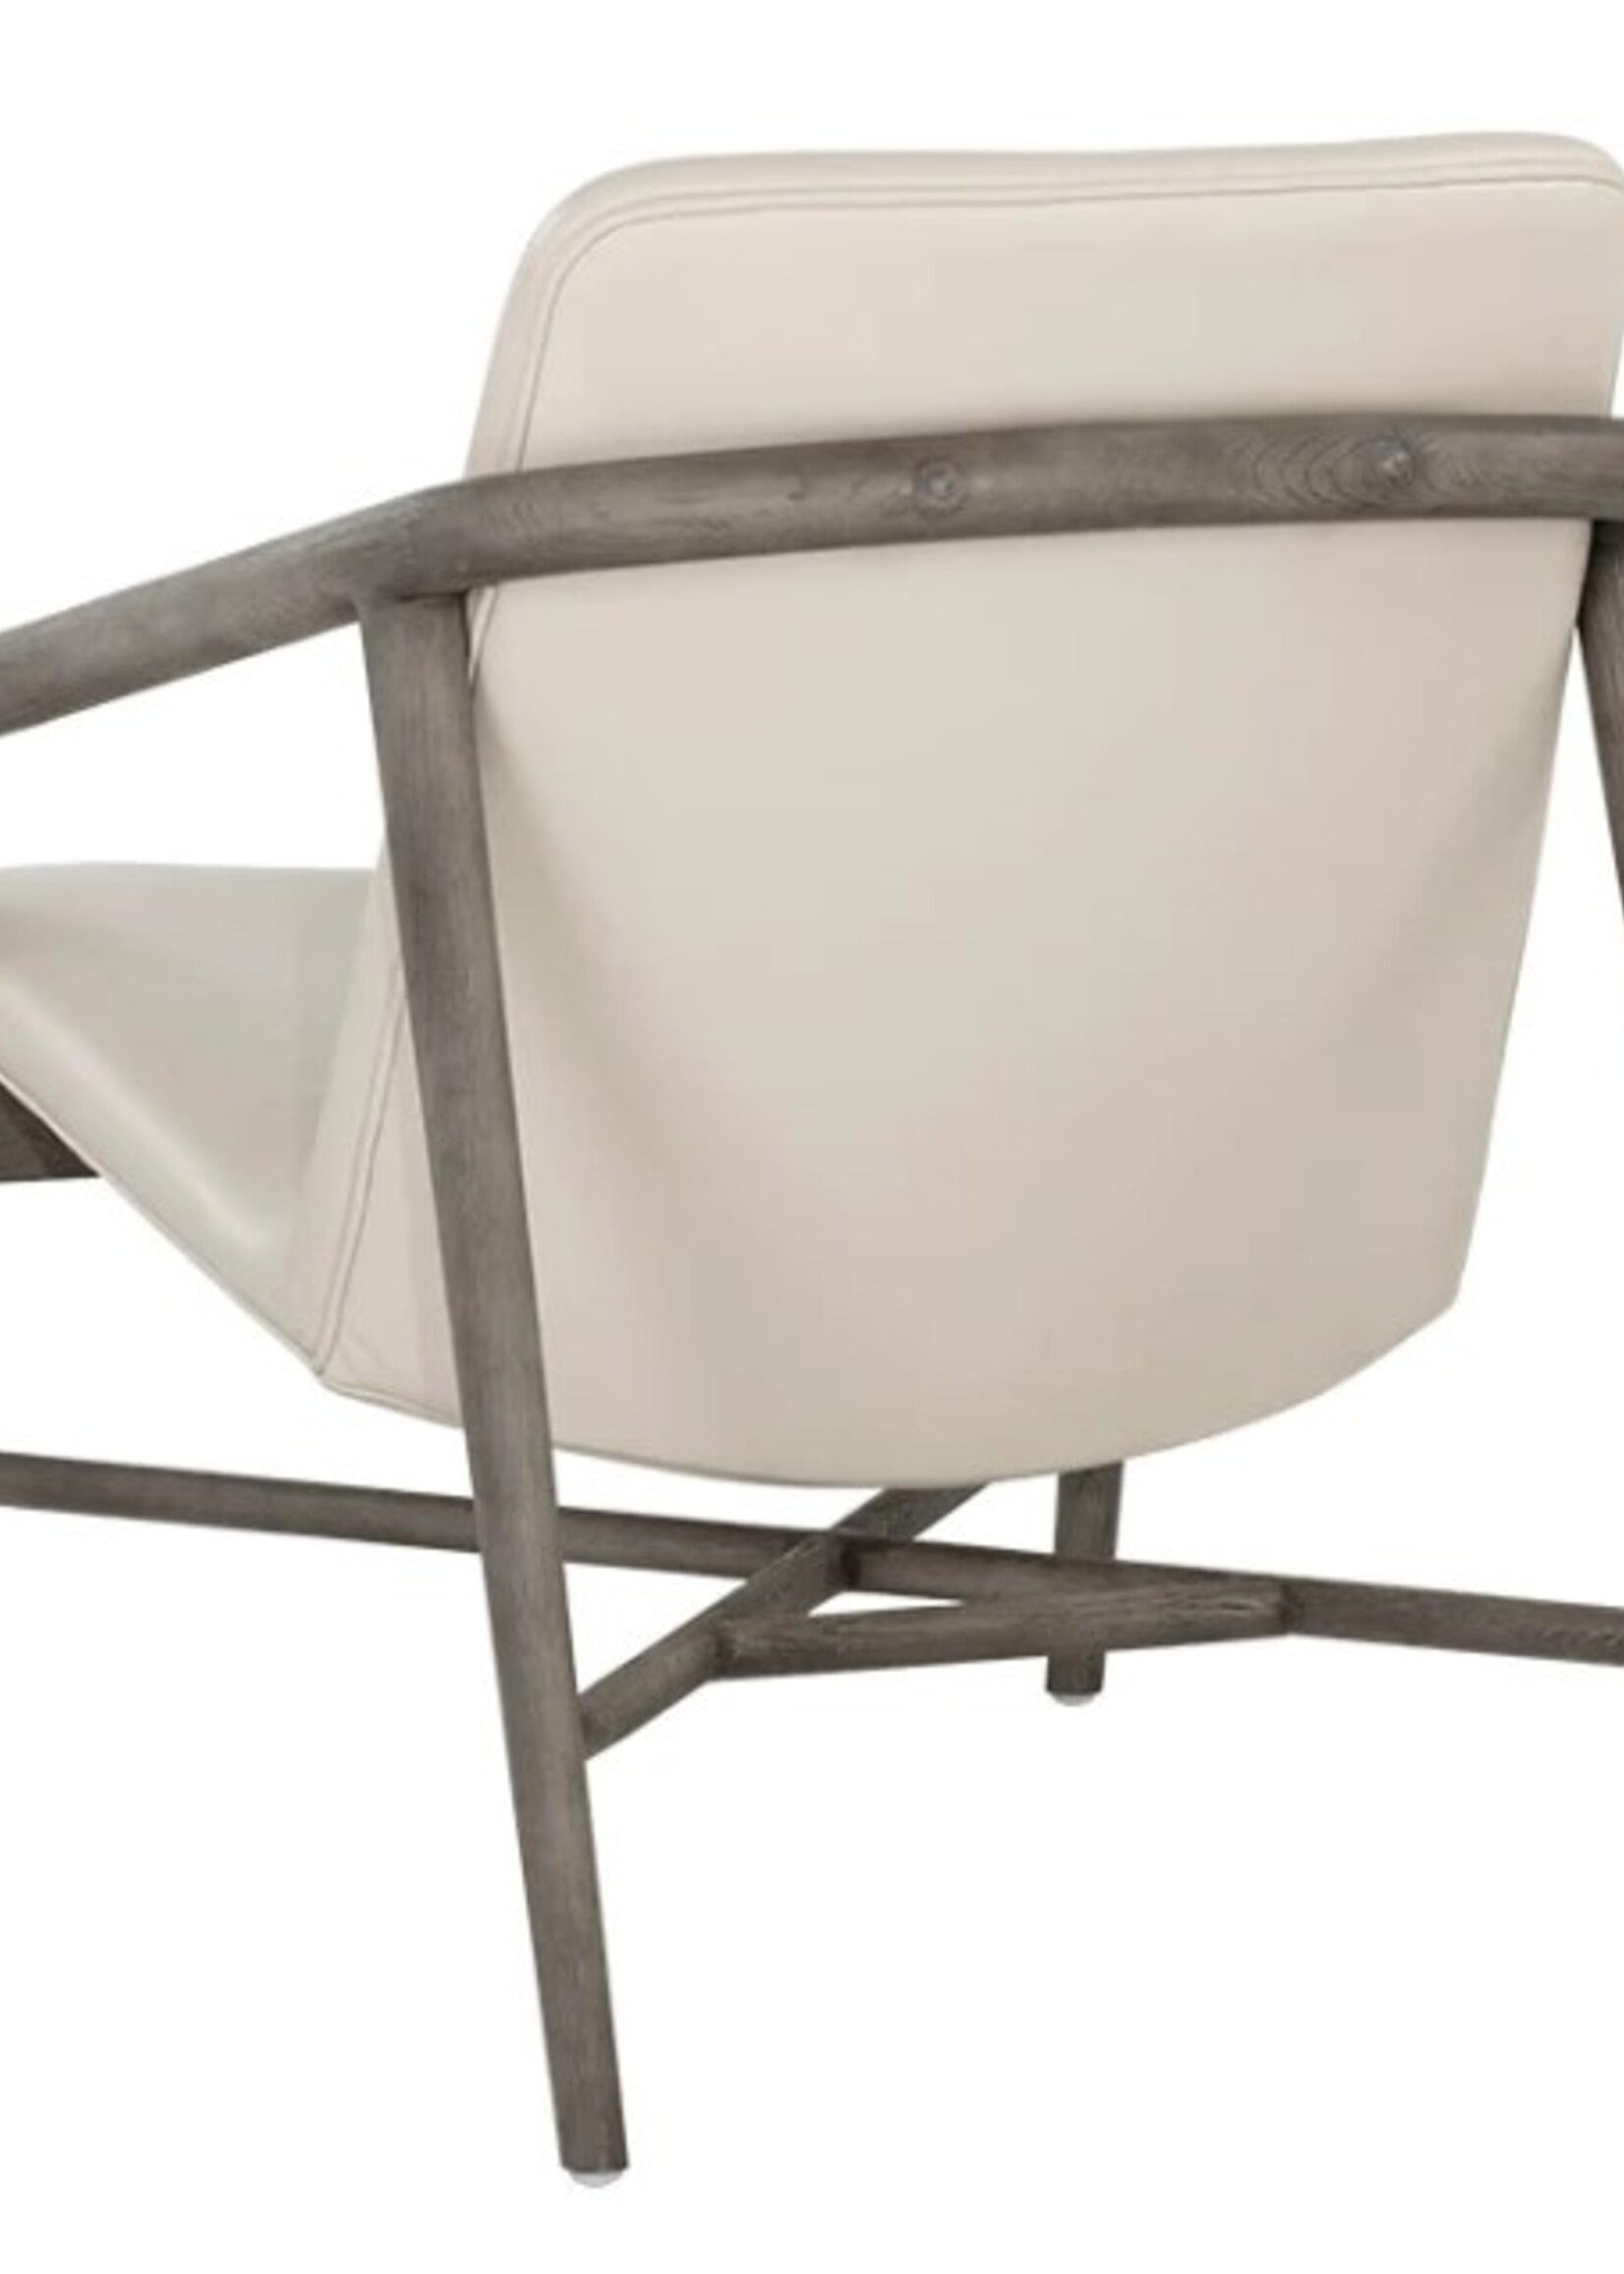 Sunpan Cinelli Lounge Chair * Cream Leather & Ash Grey Wood * 26.5x35x31.25H